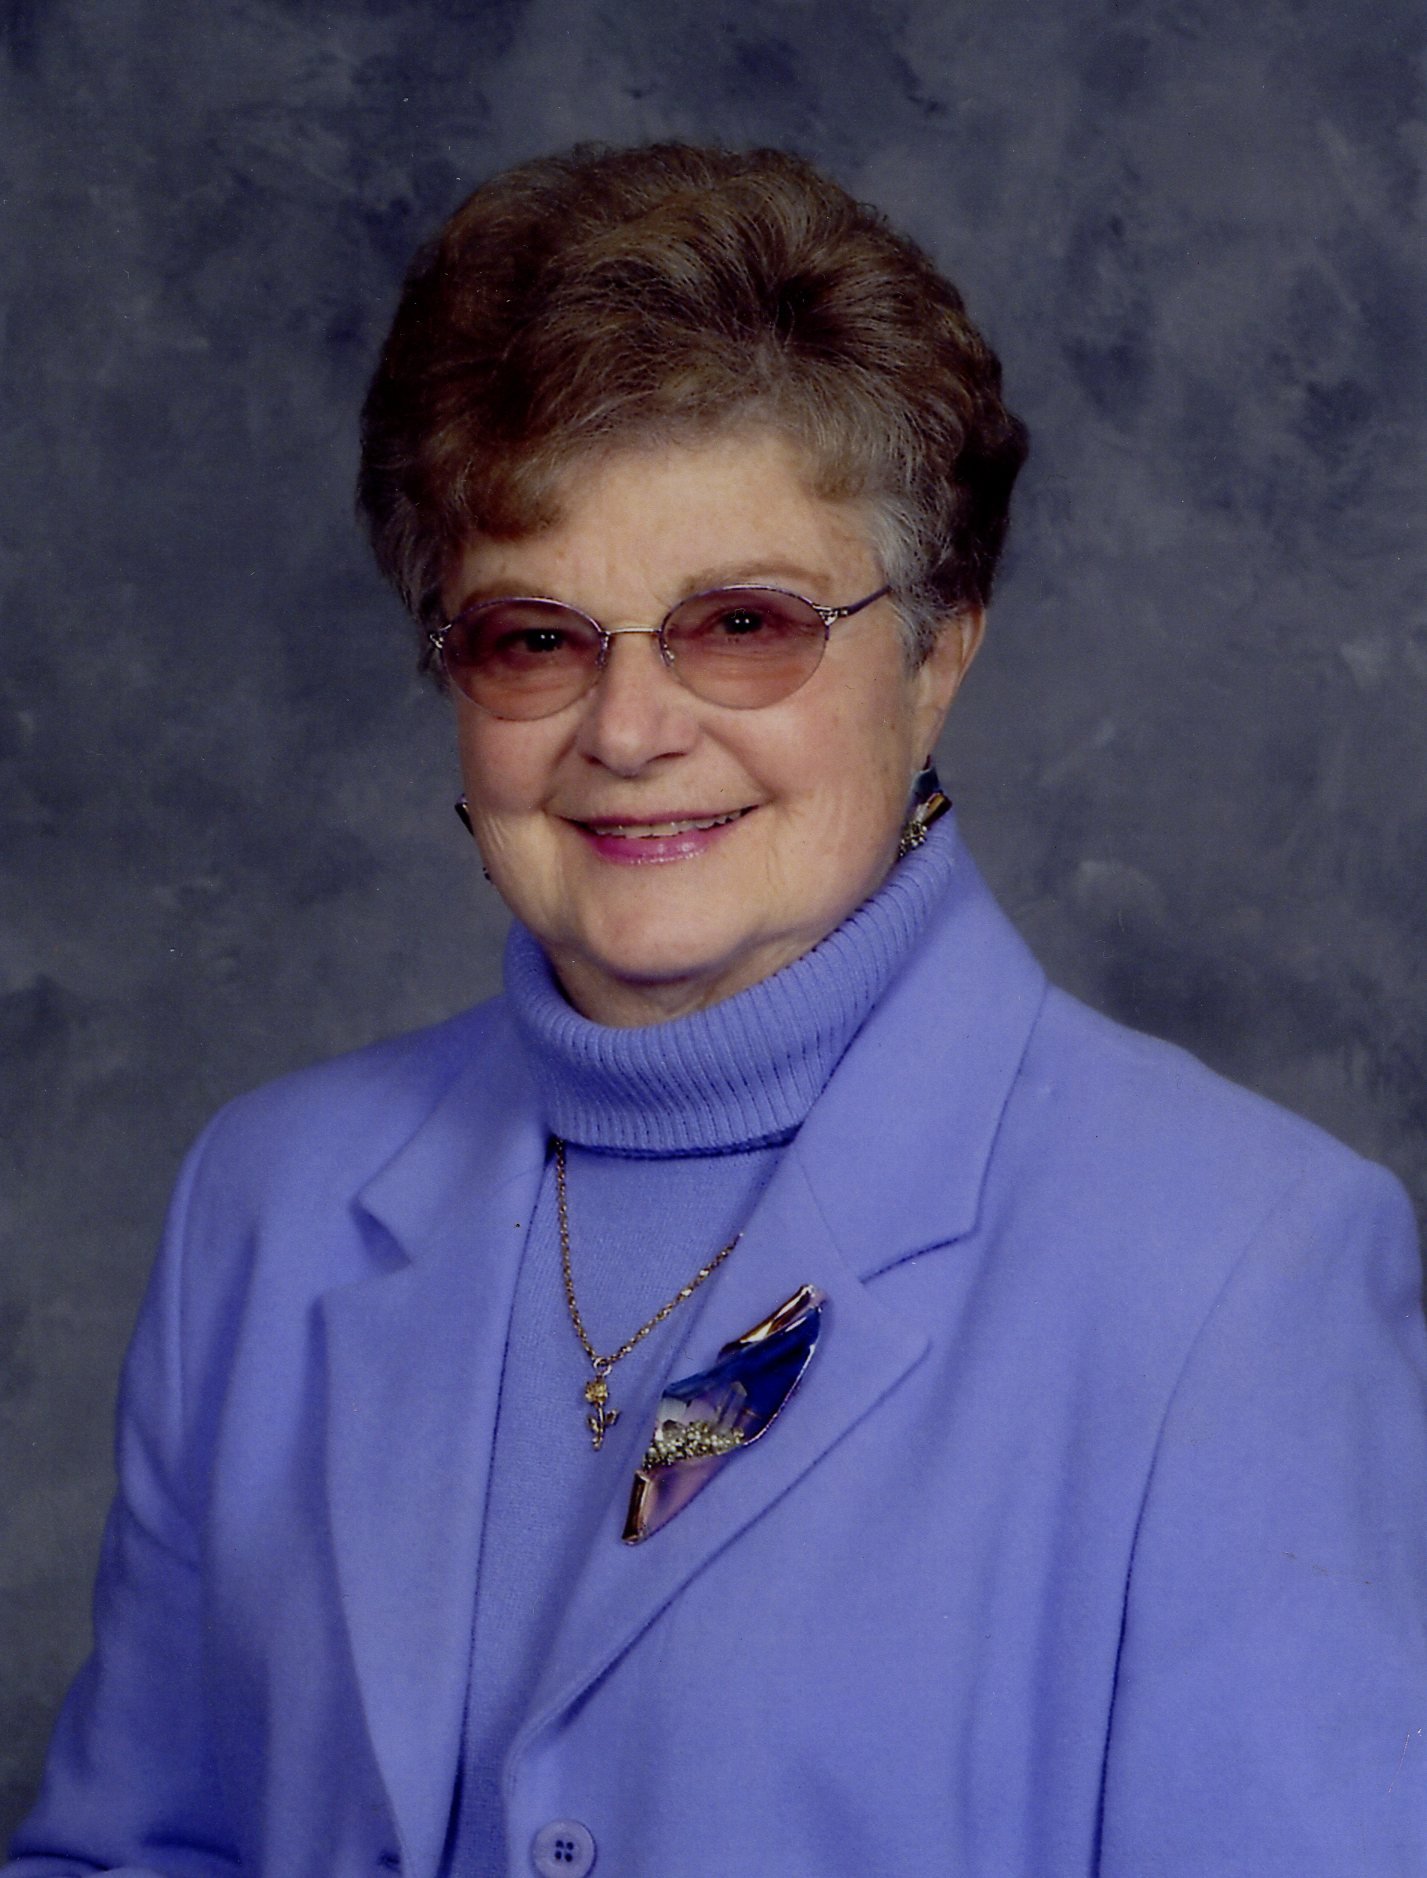 Virginia Thomas Mitchell Obituary - Visitation & Funeral Information